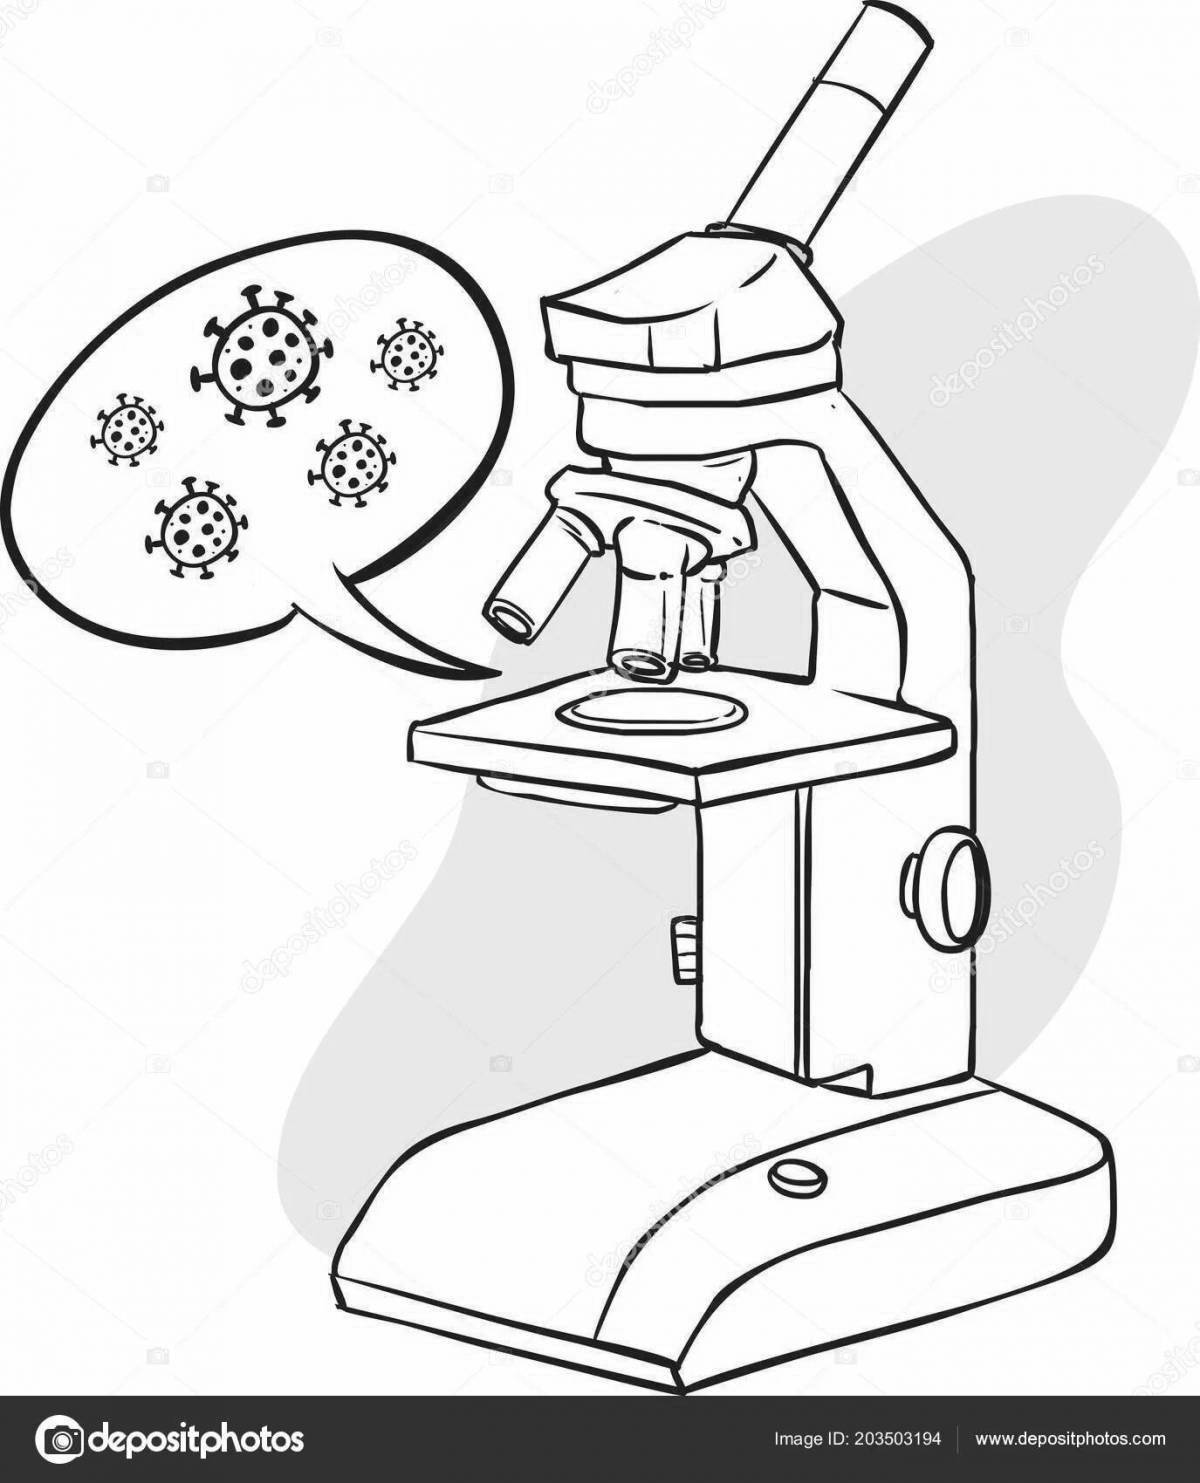 Child microscope #7